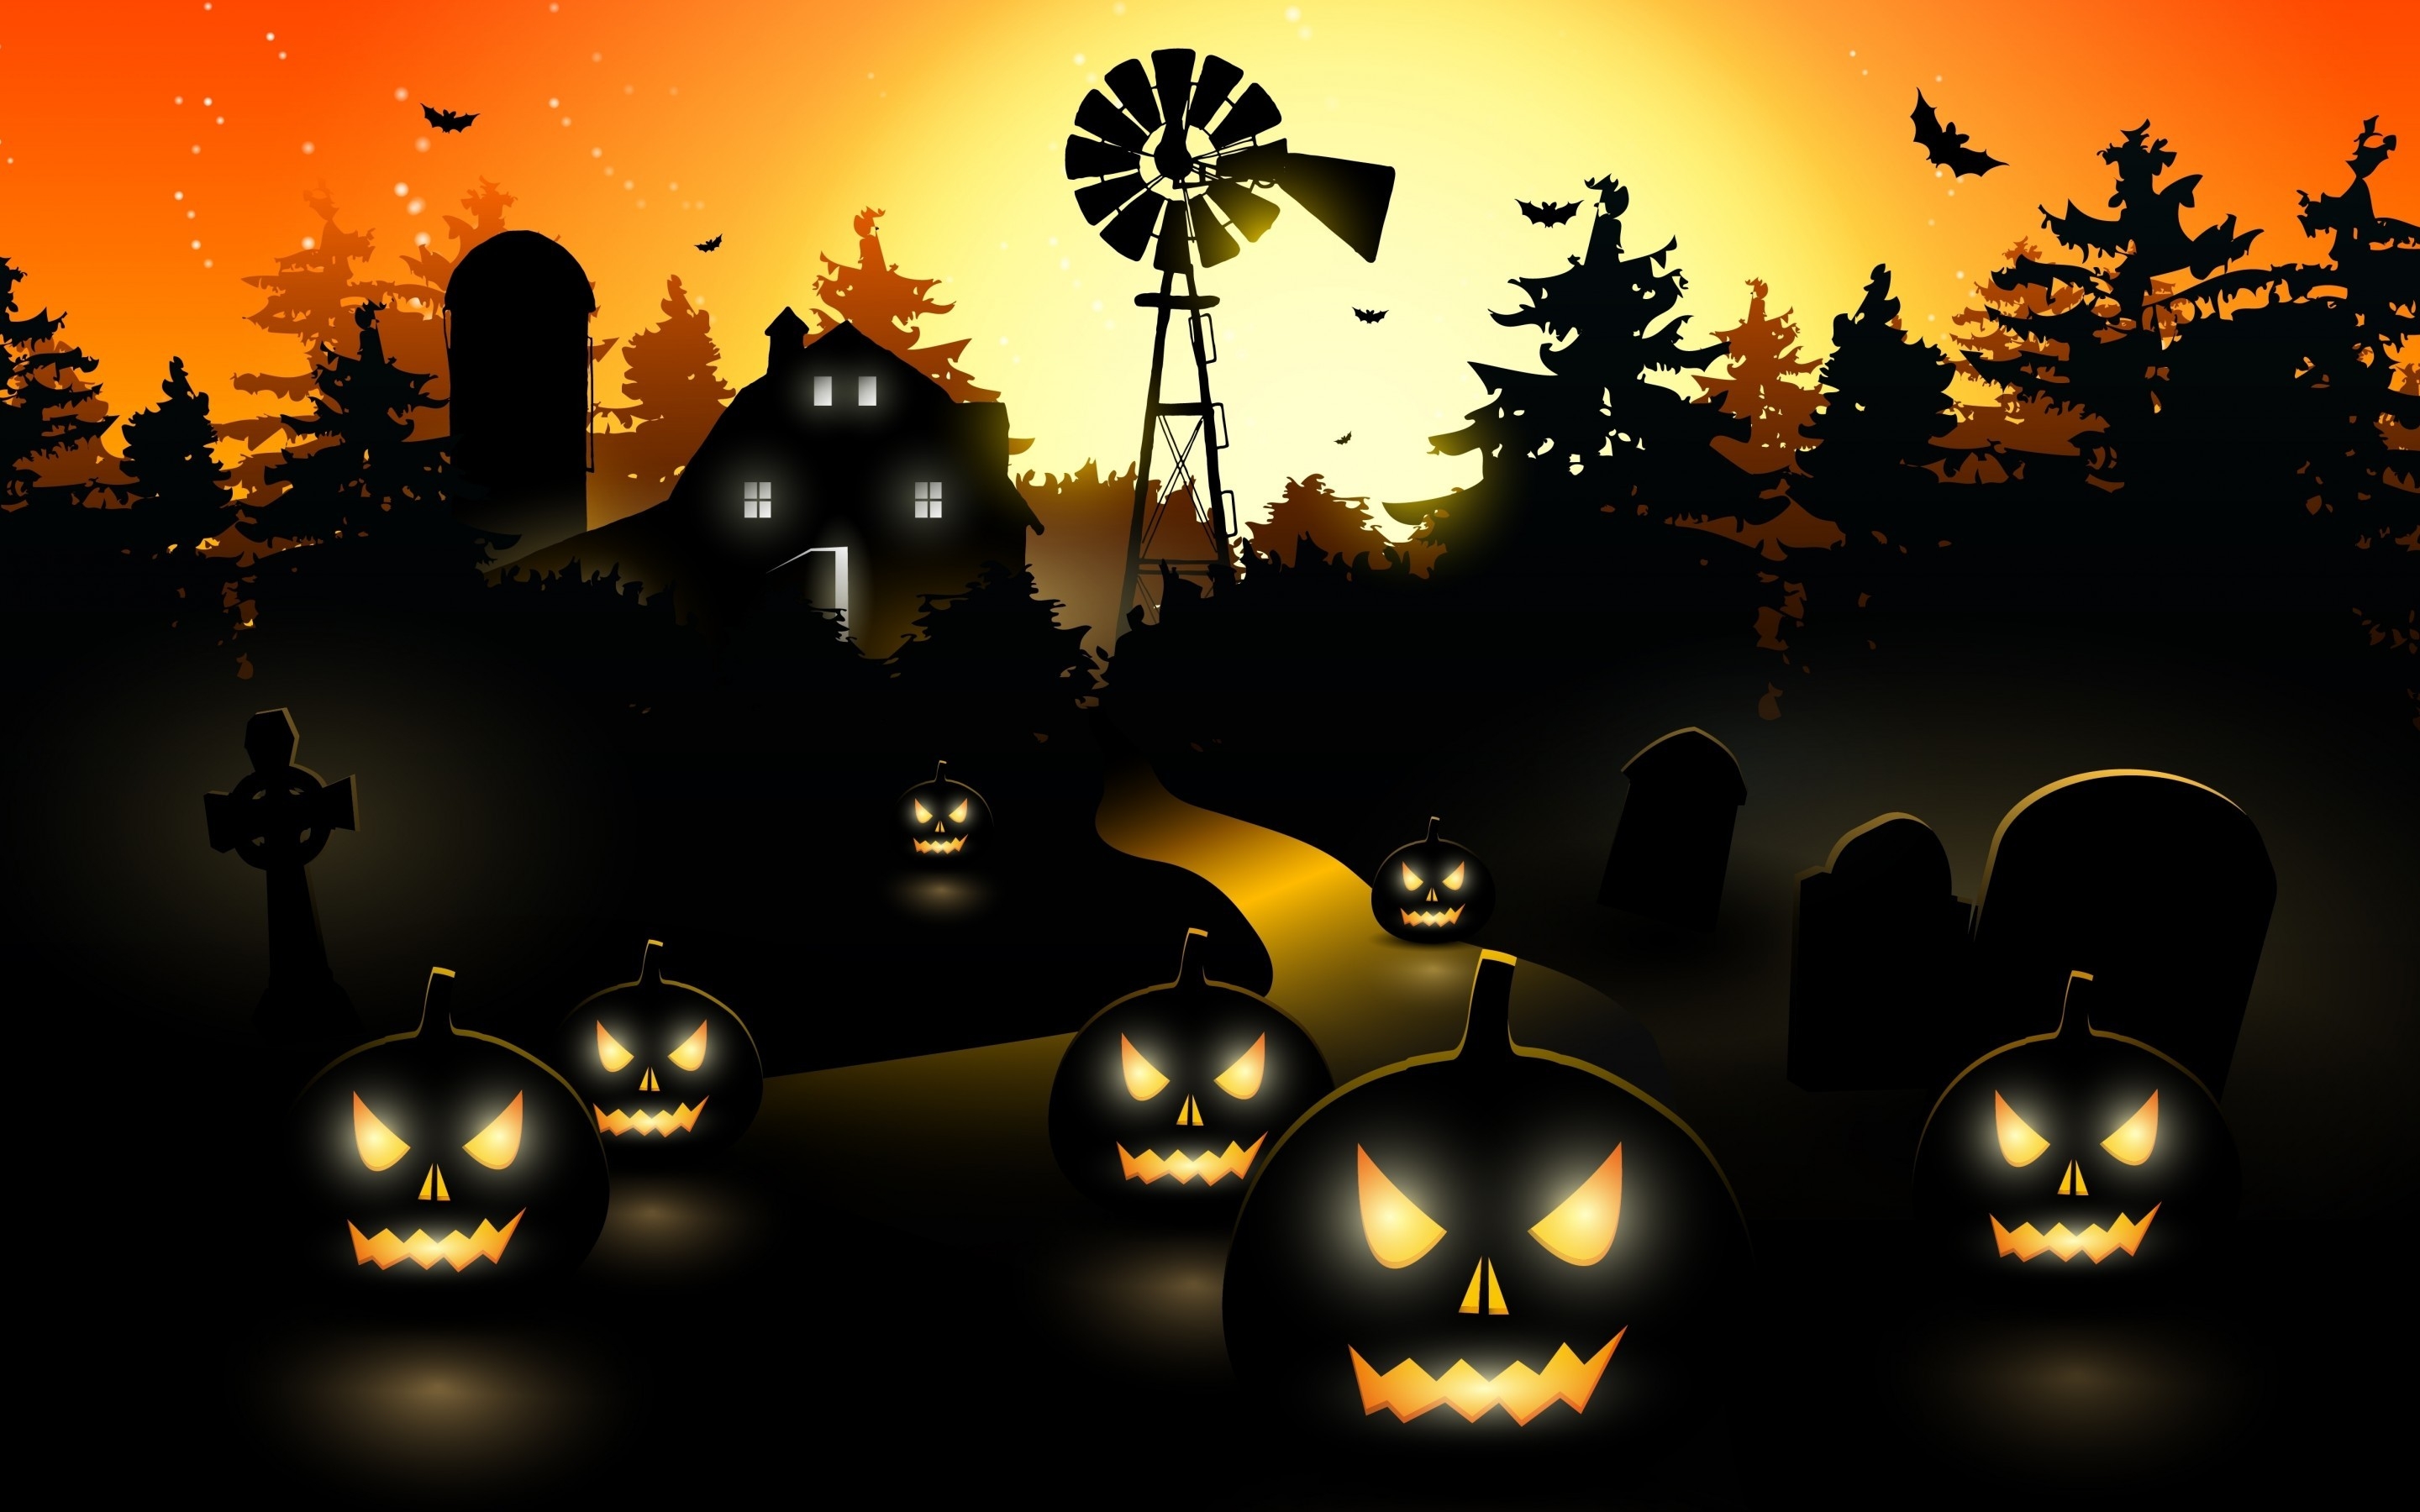 Halloween Black Pumpkins for 2880 x 1800 Retina Display resolution